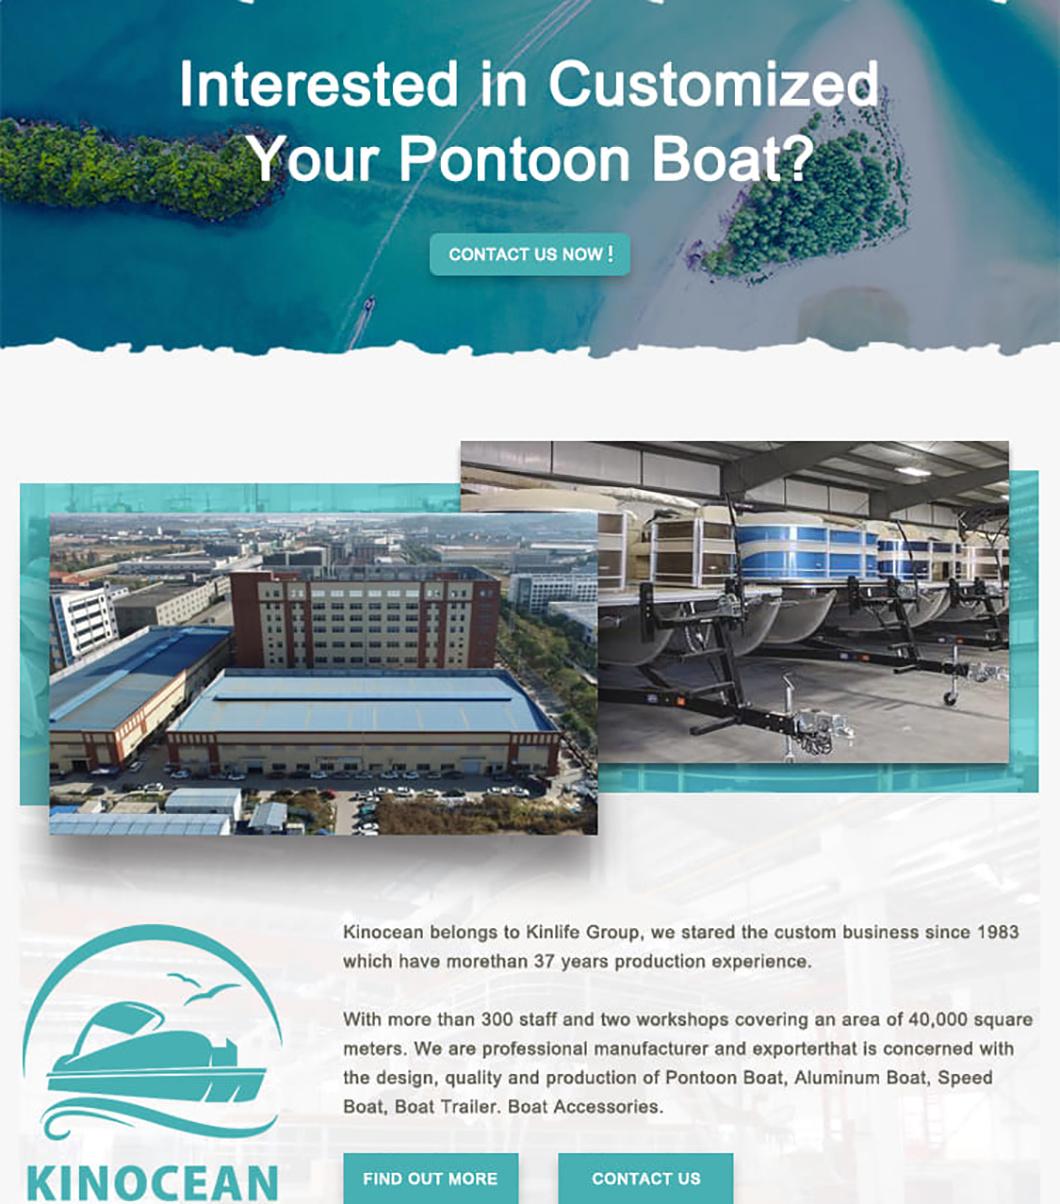 Kinocean 25FT Luxury Leisure Sightseeing 10 Person Party Barge Aluminum Pontoon Boats for Sale (EVA FLOOR)